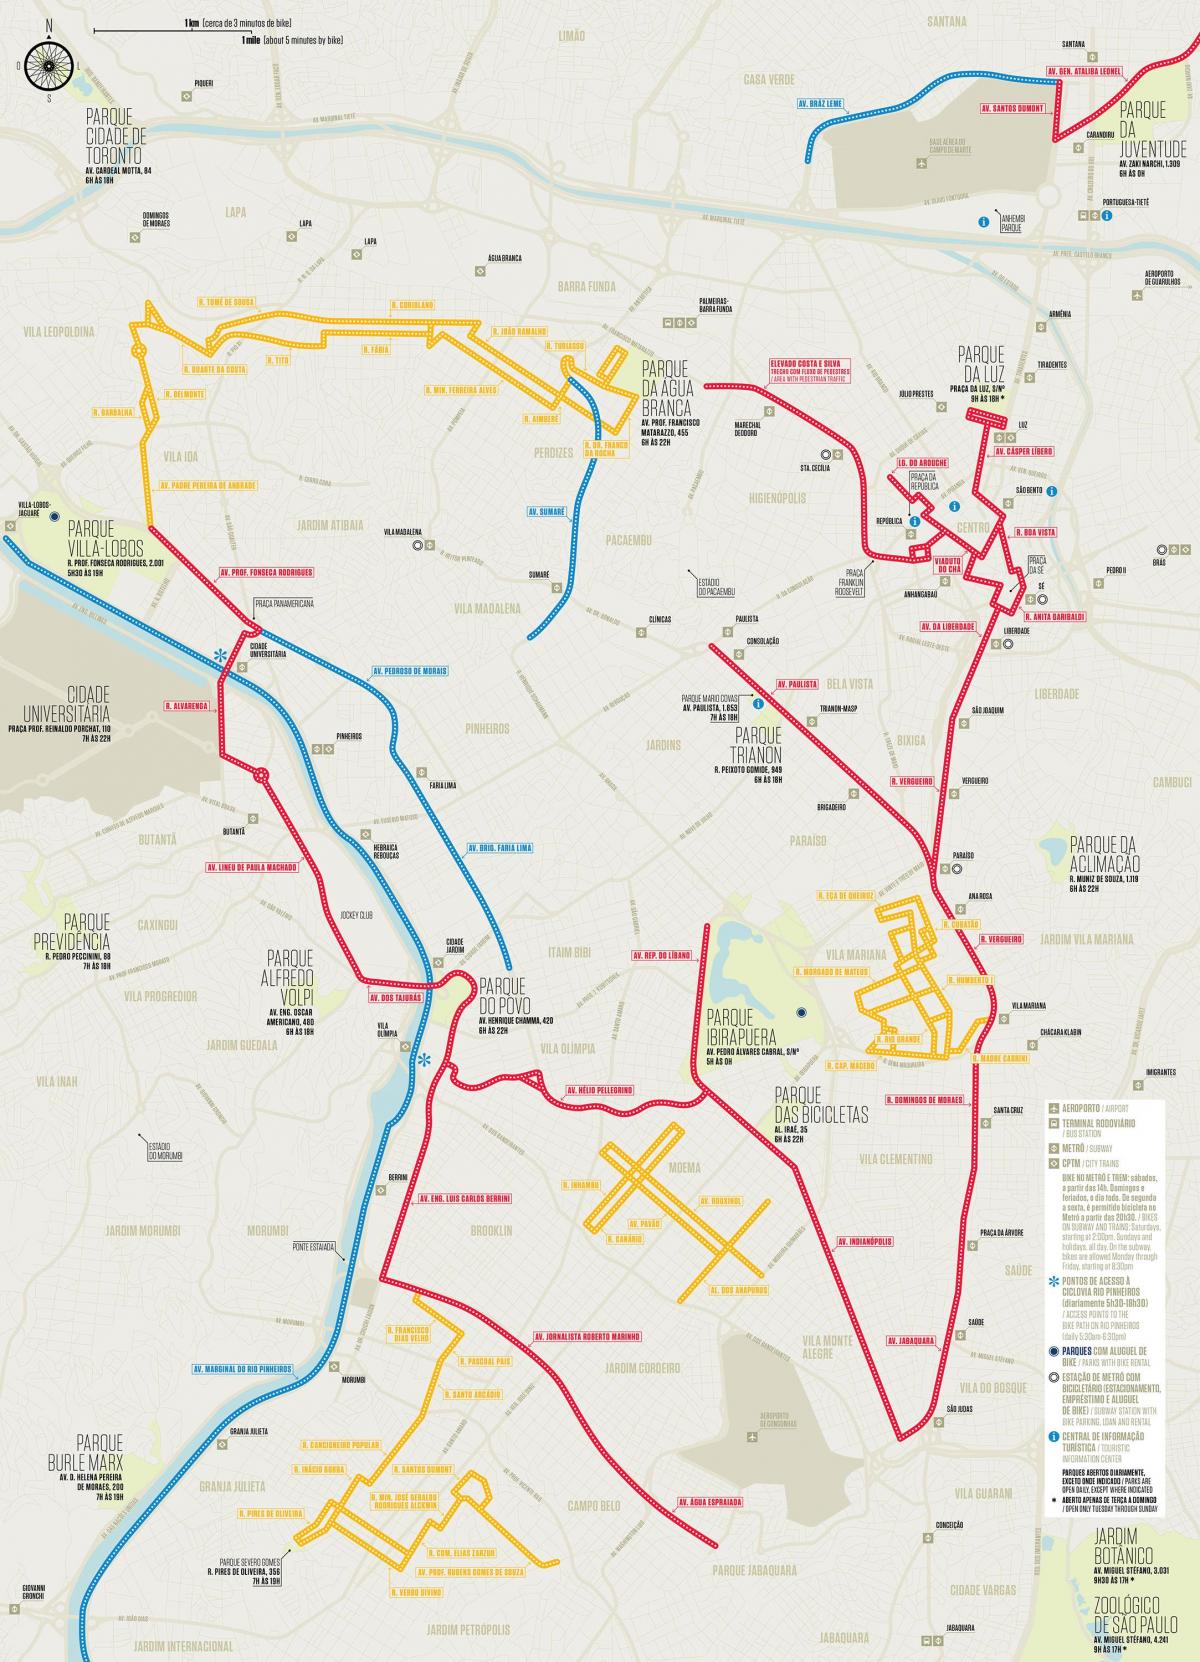 Mapa del carril bici de São Paulo